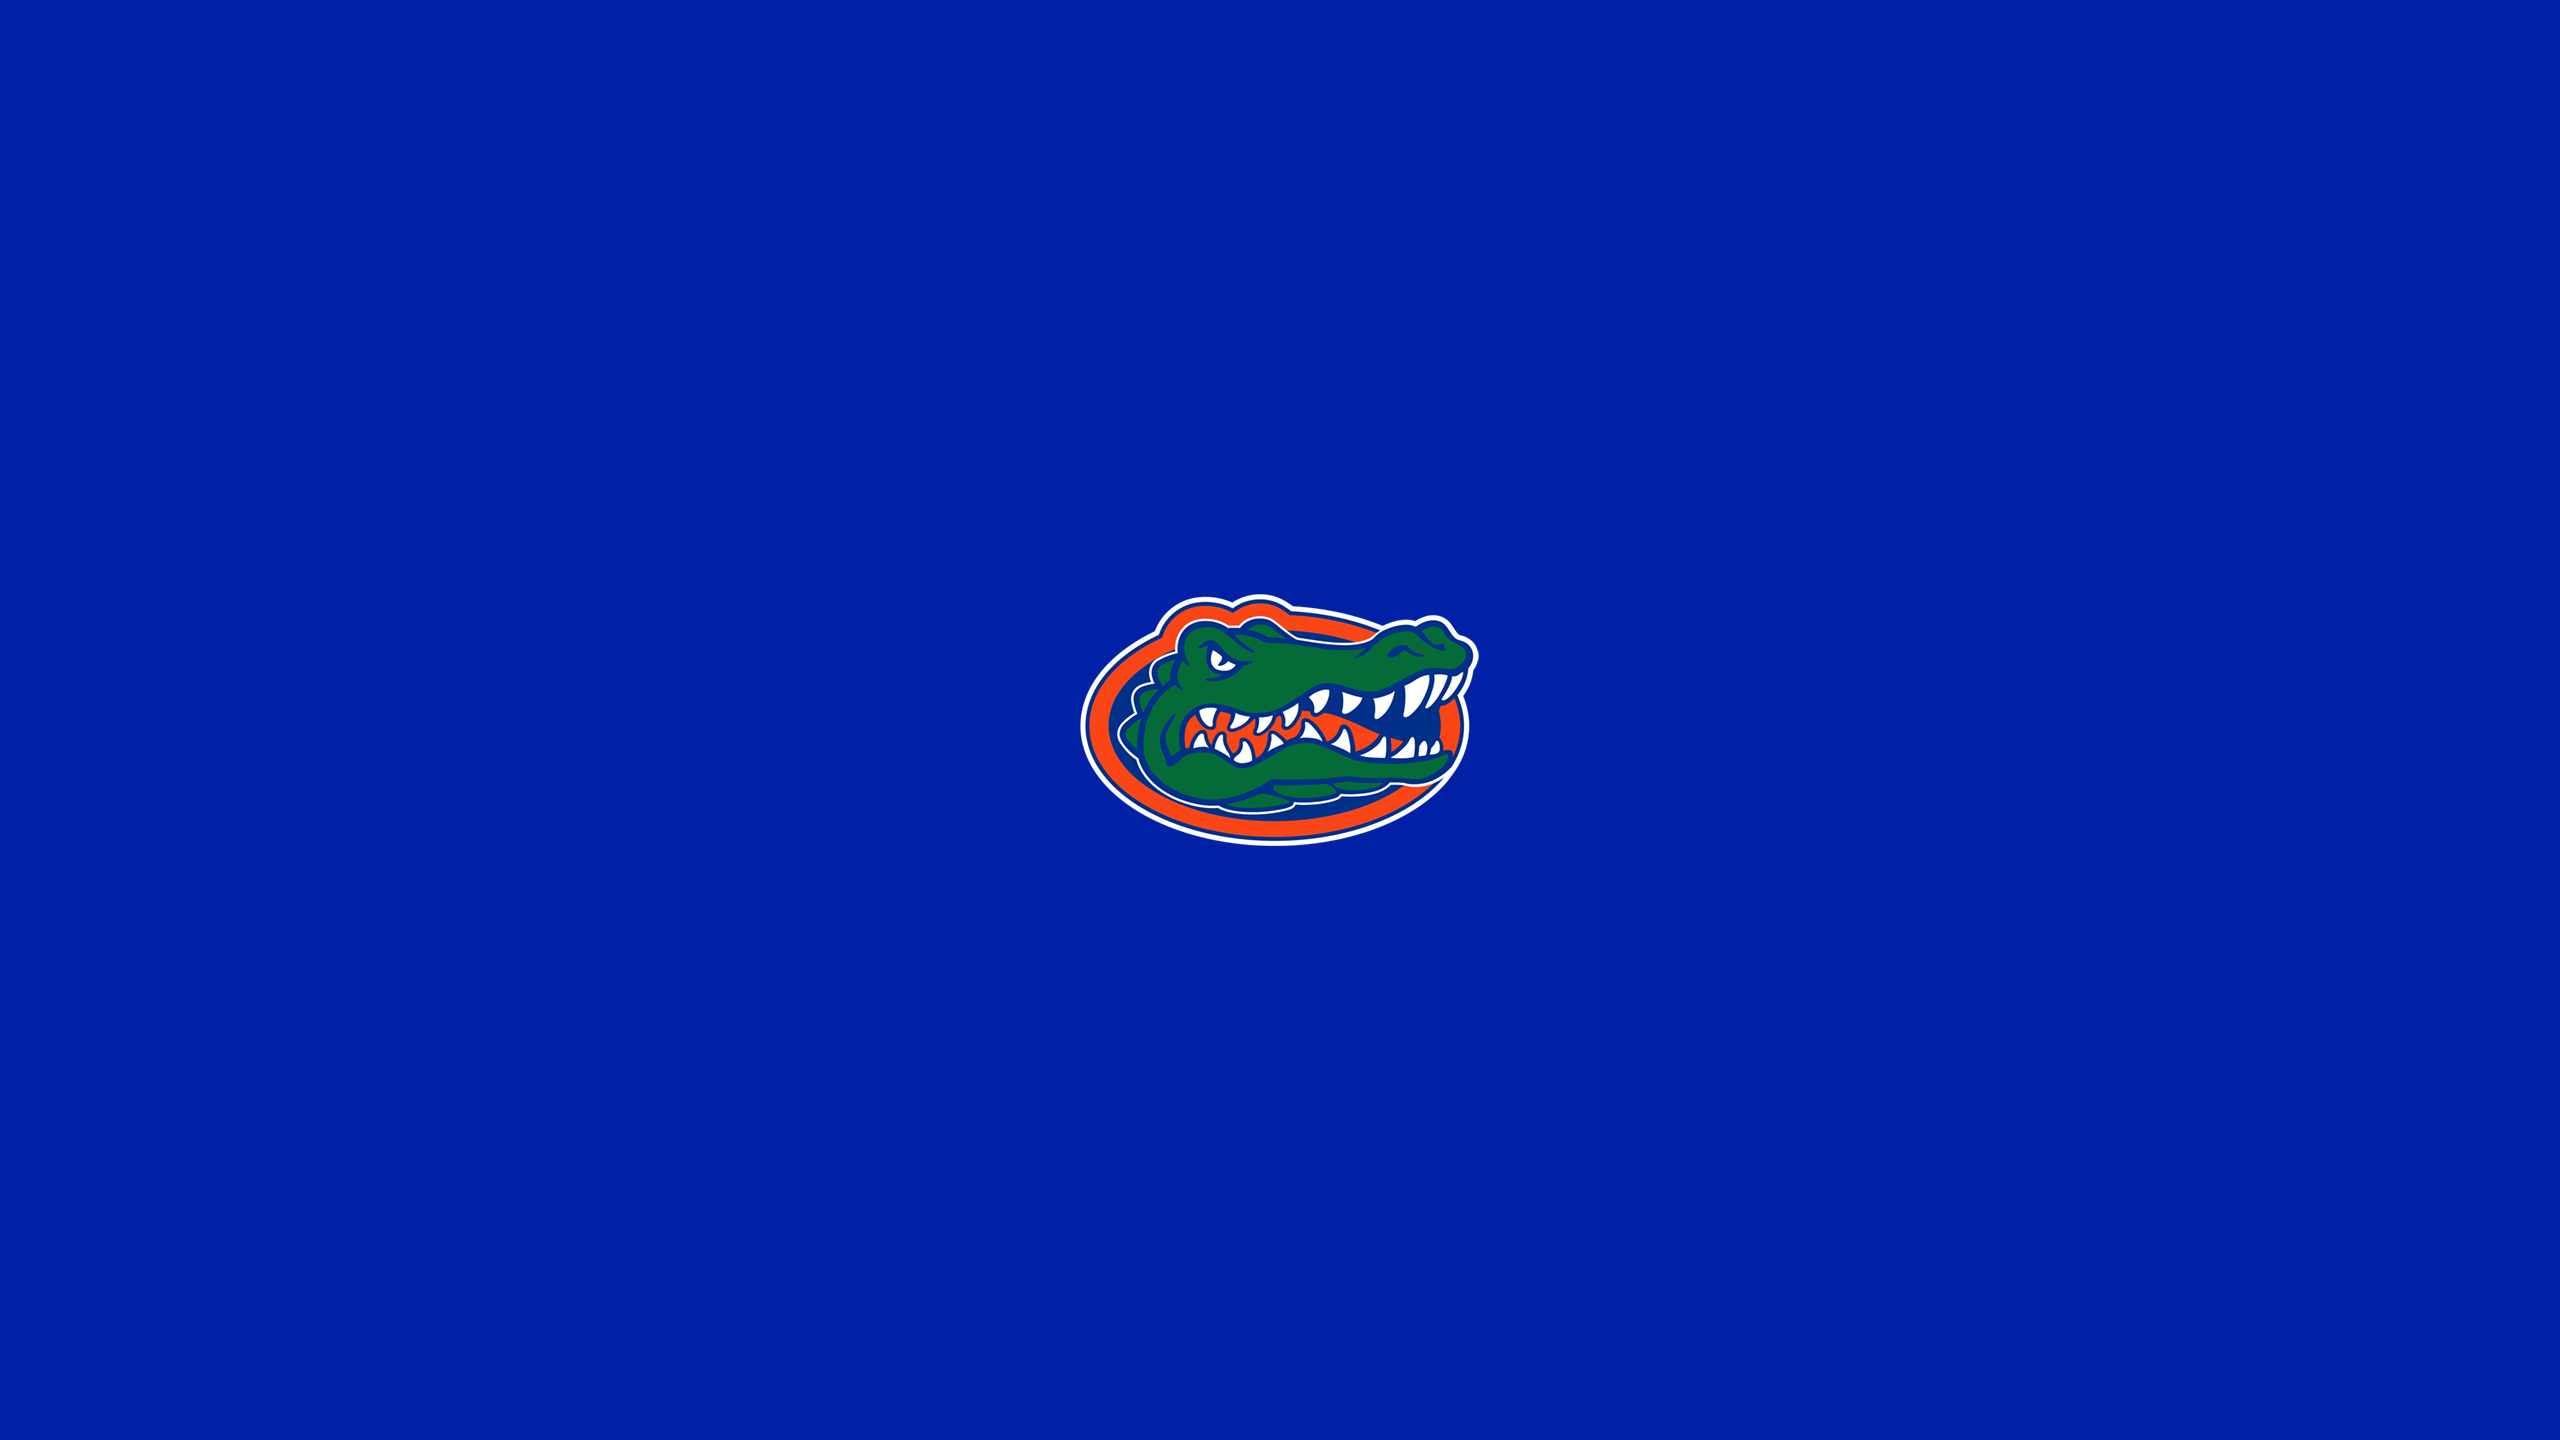 Florida Gators Basketball - NCAAB - Square Bettor